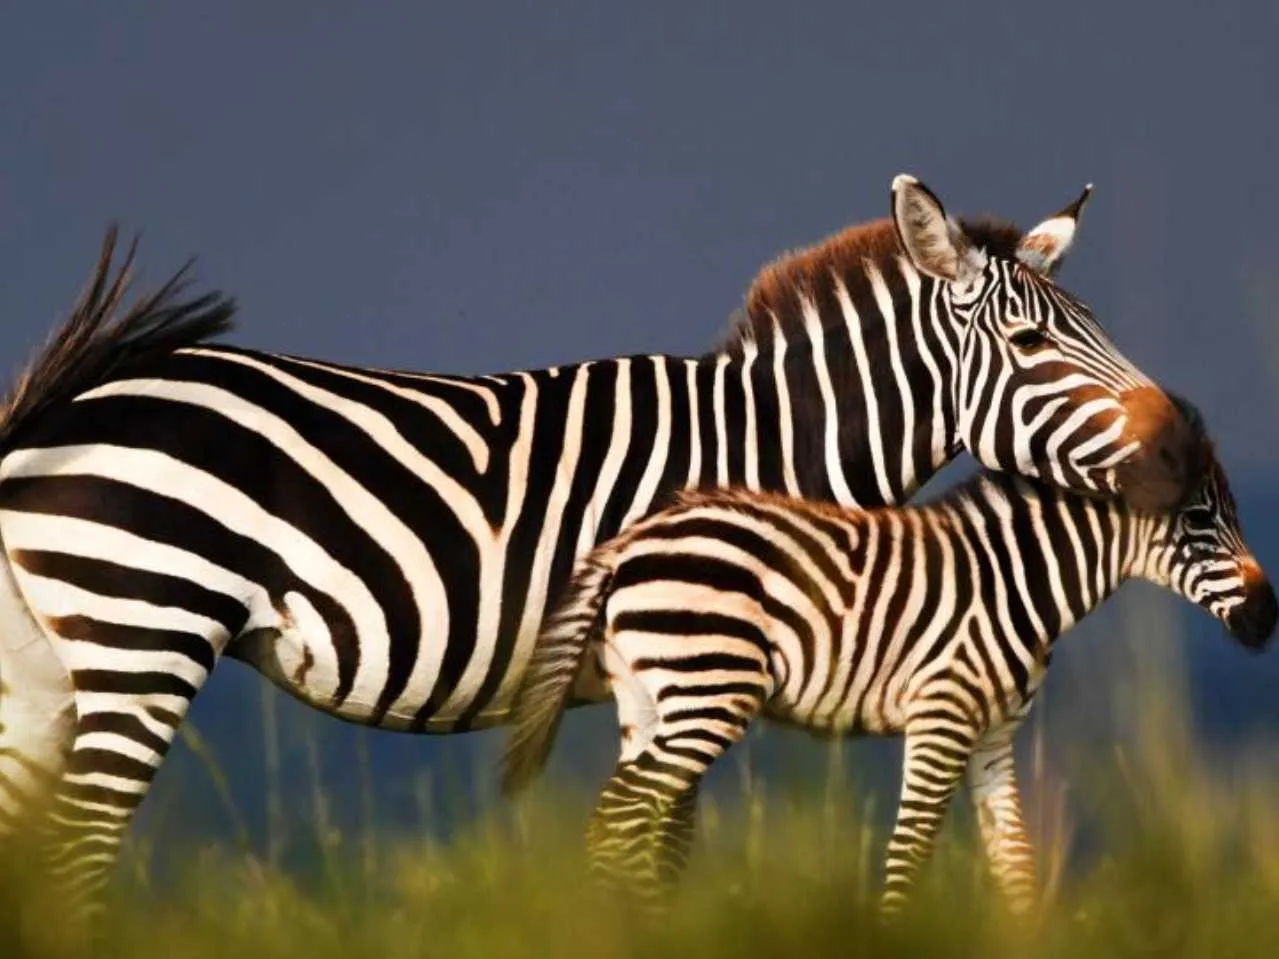 Zebra in grasslands